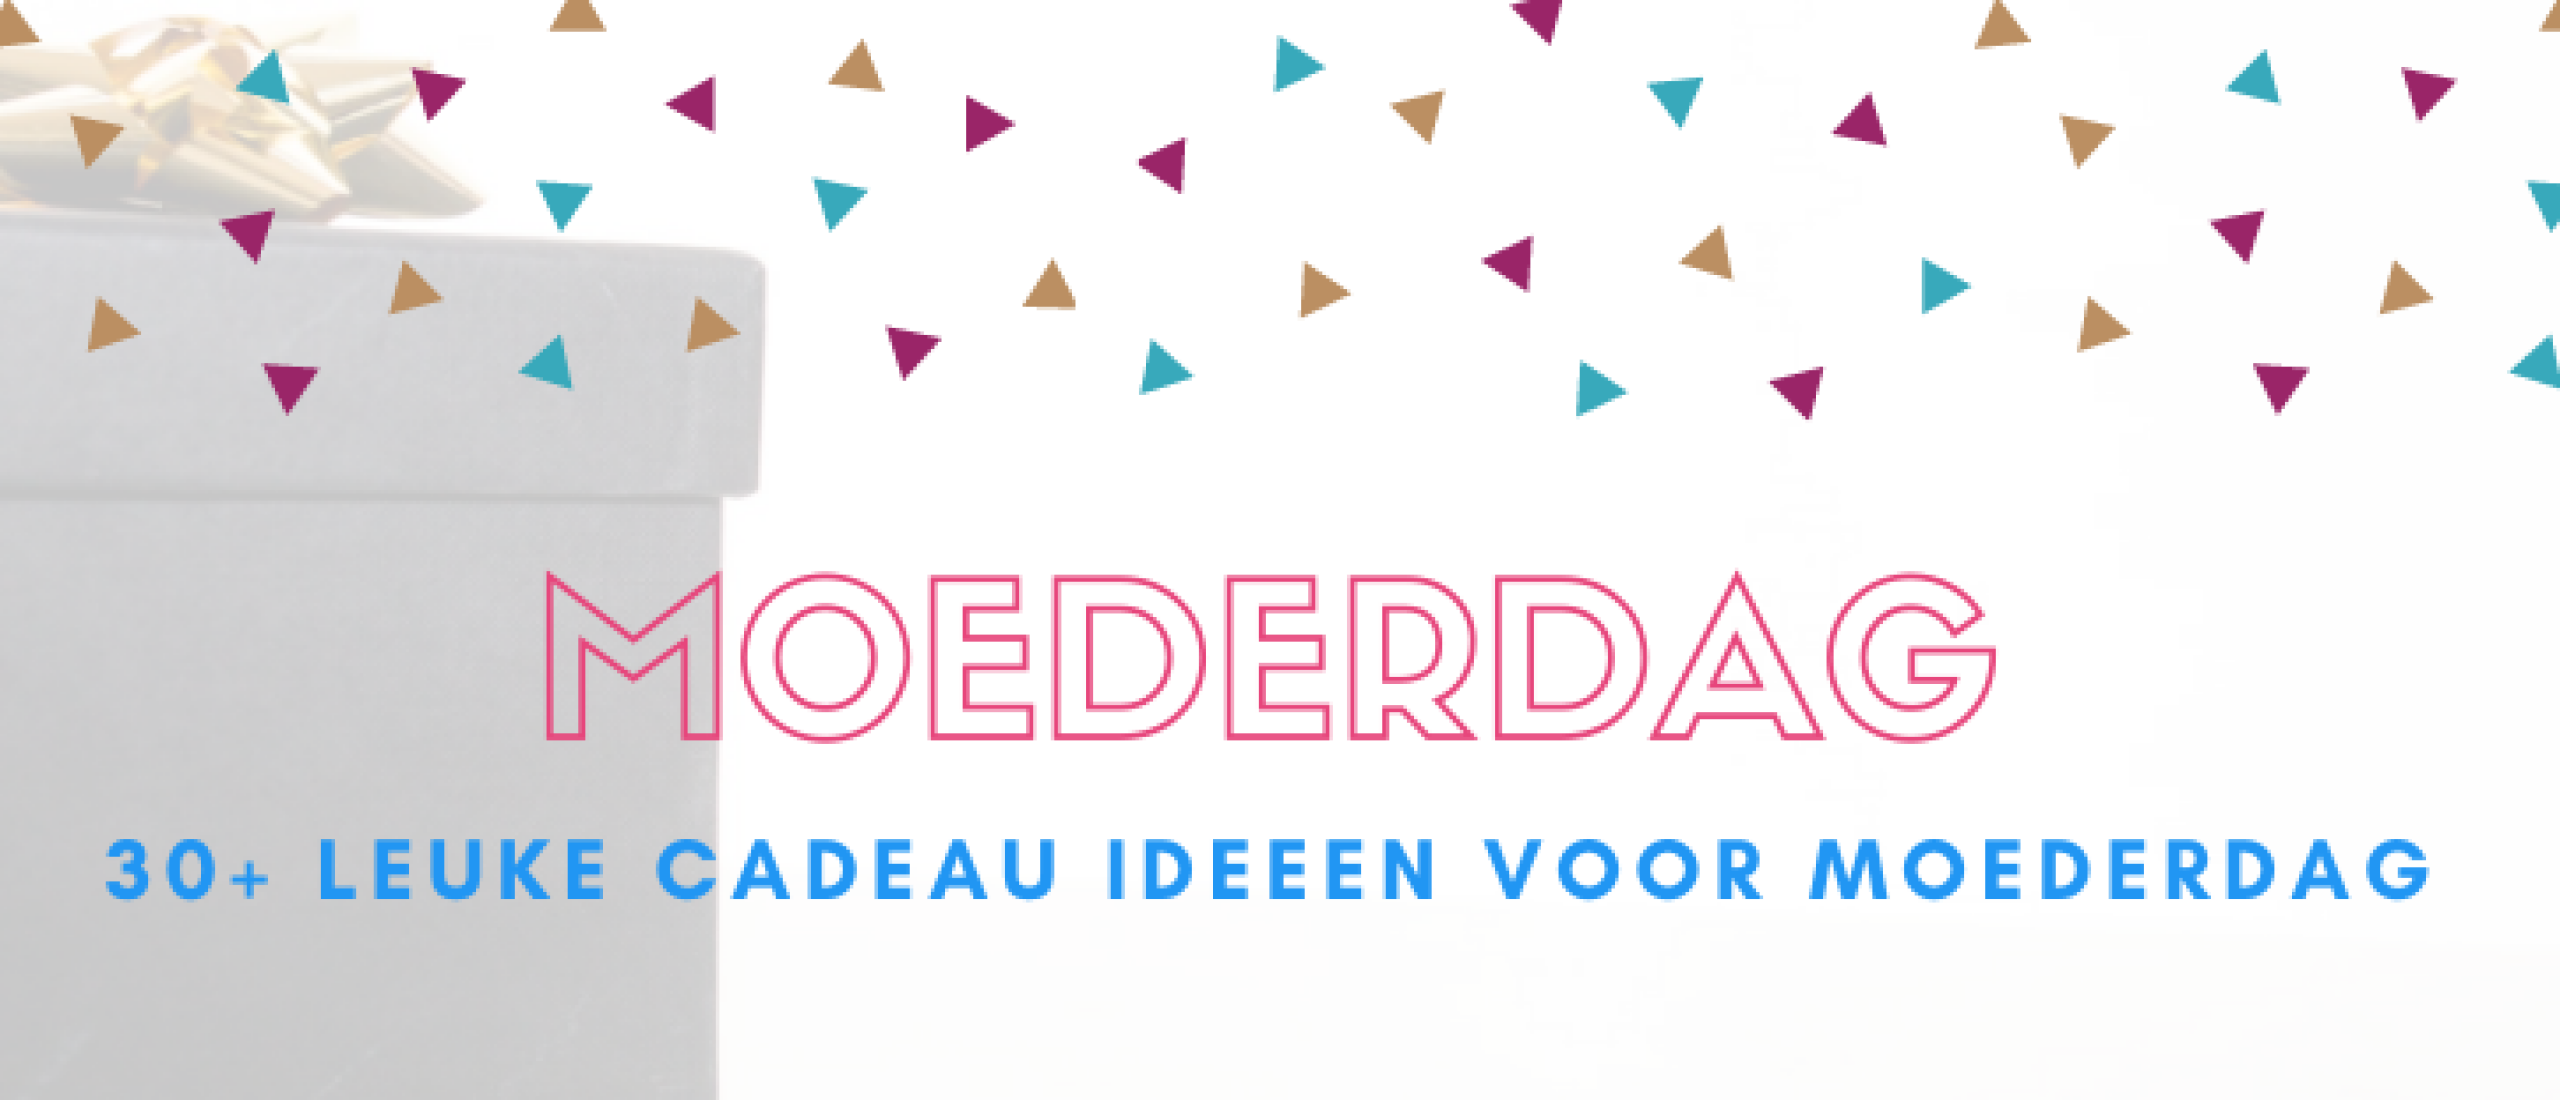 30+ Leuke, Originele Moederdag Cadeau Ideeën en Tips | LOISIR.nl Cadeau Inspiratie